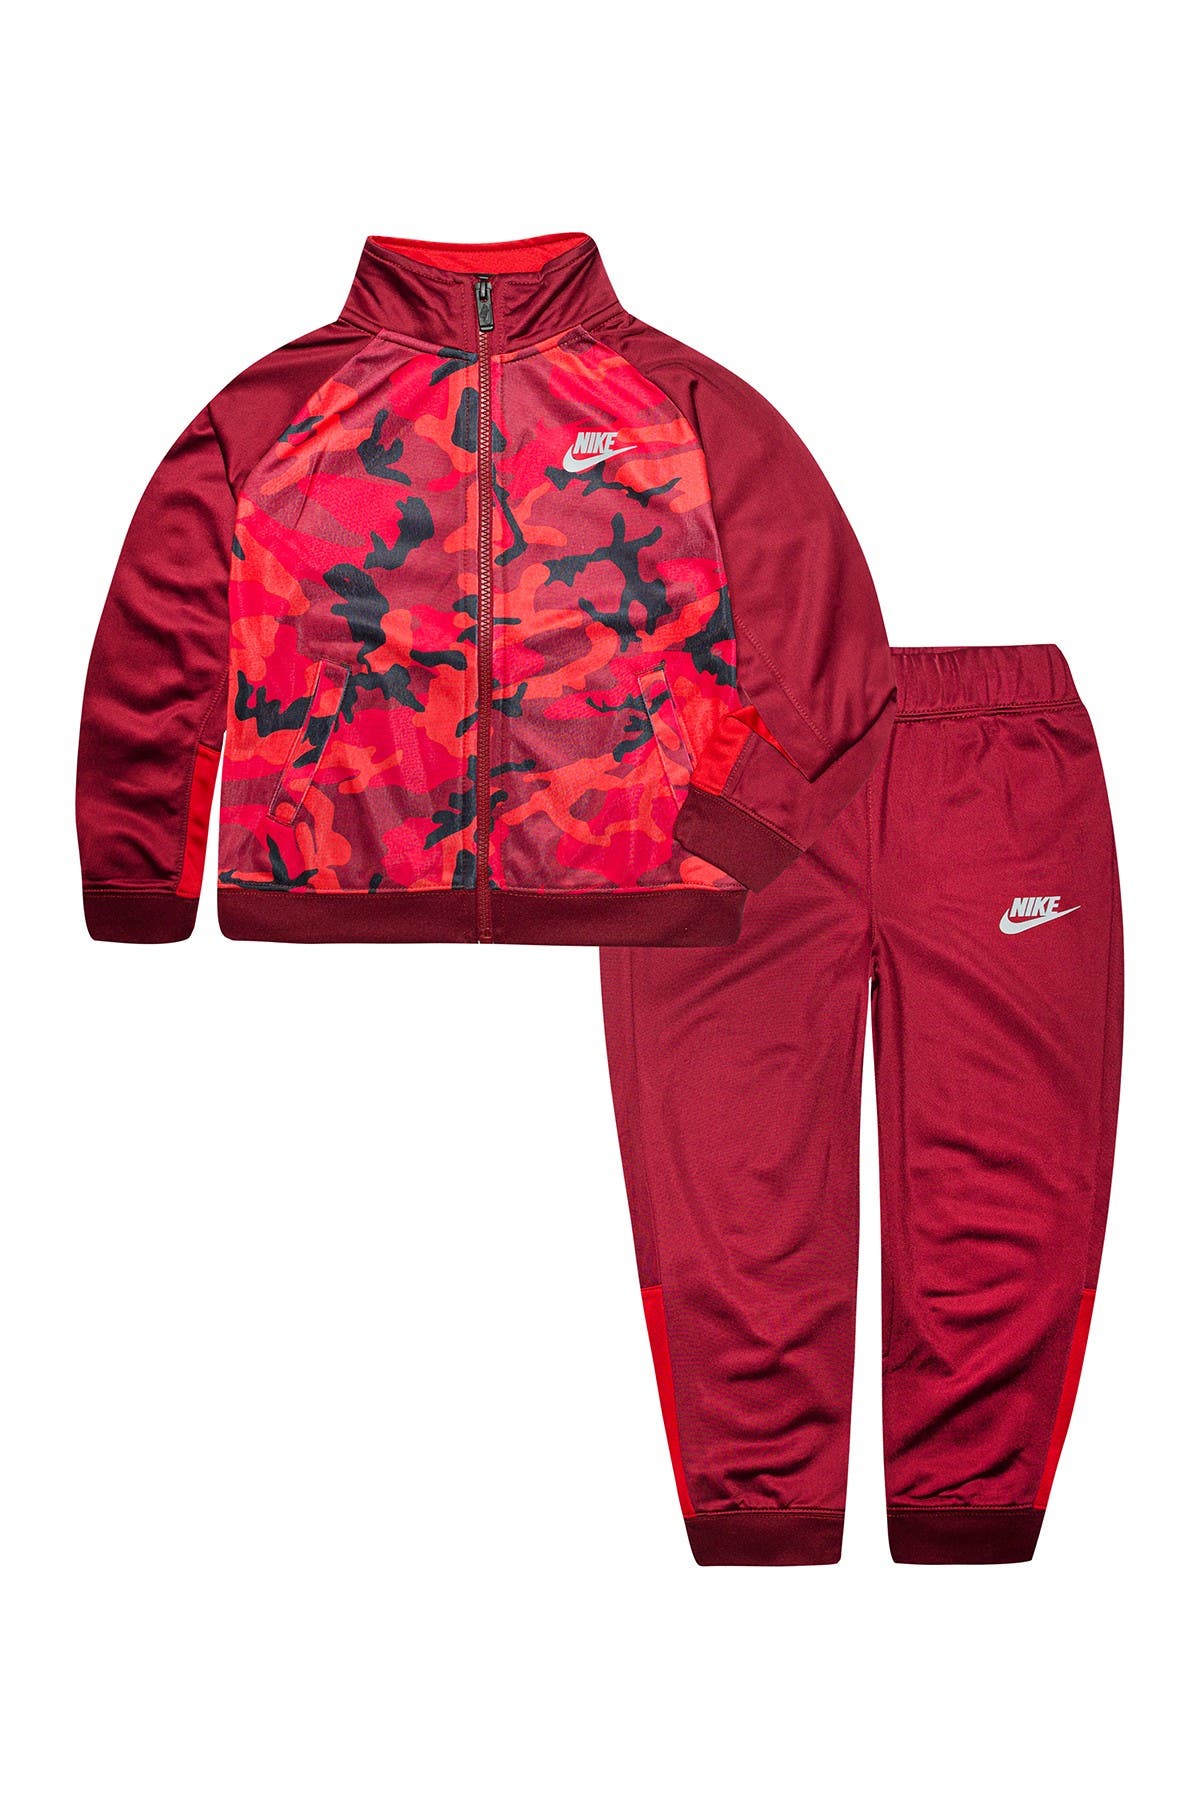 Nike | Camo Printed Jacket and Jogger 